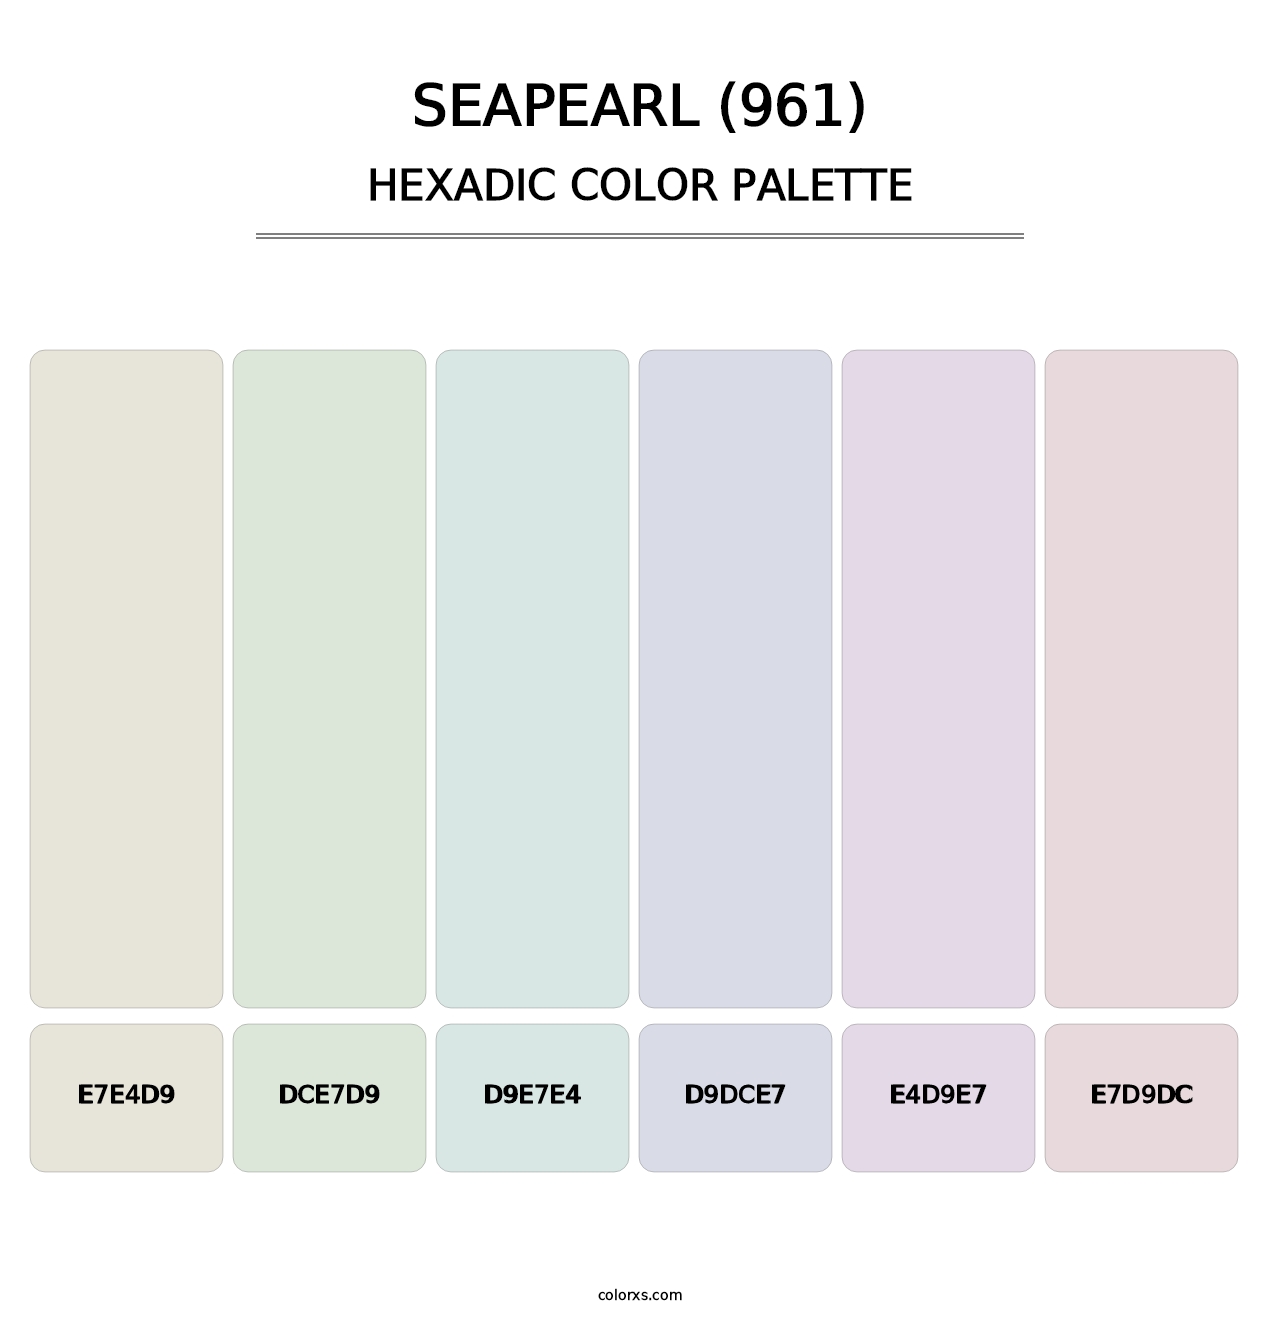 Seapearl (961) - Hexadic Color Palette